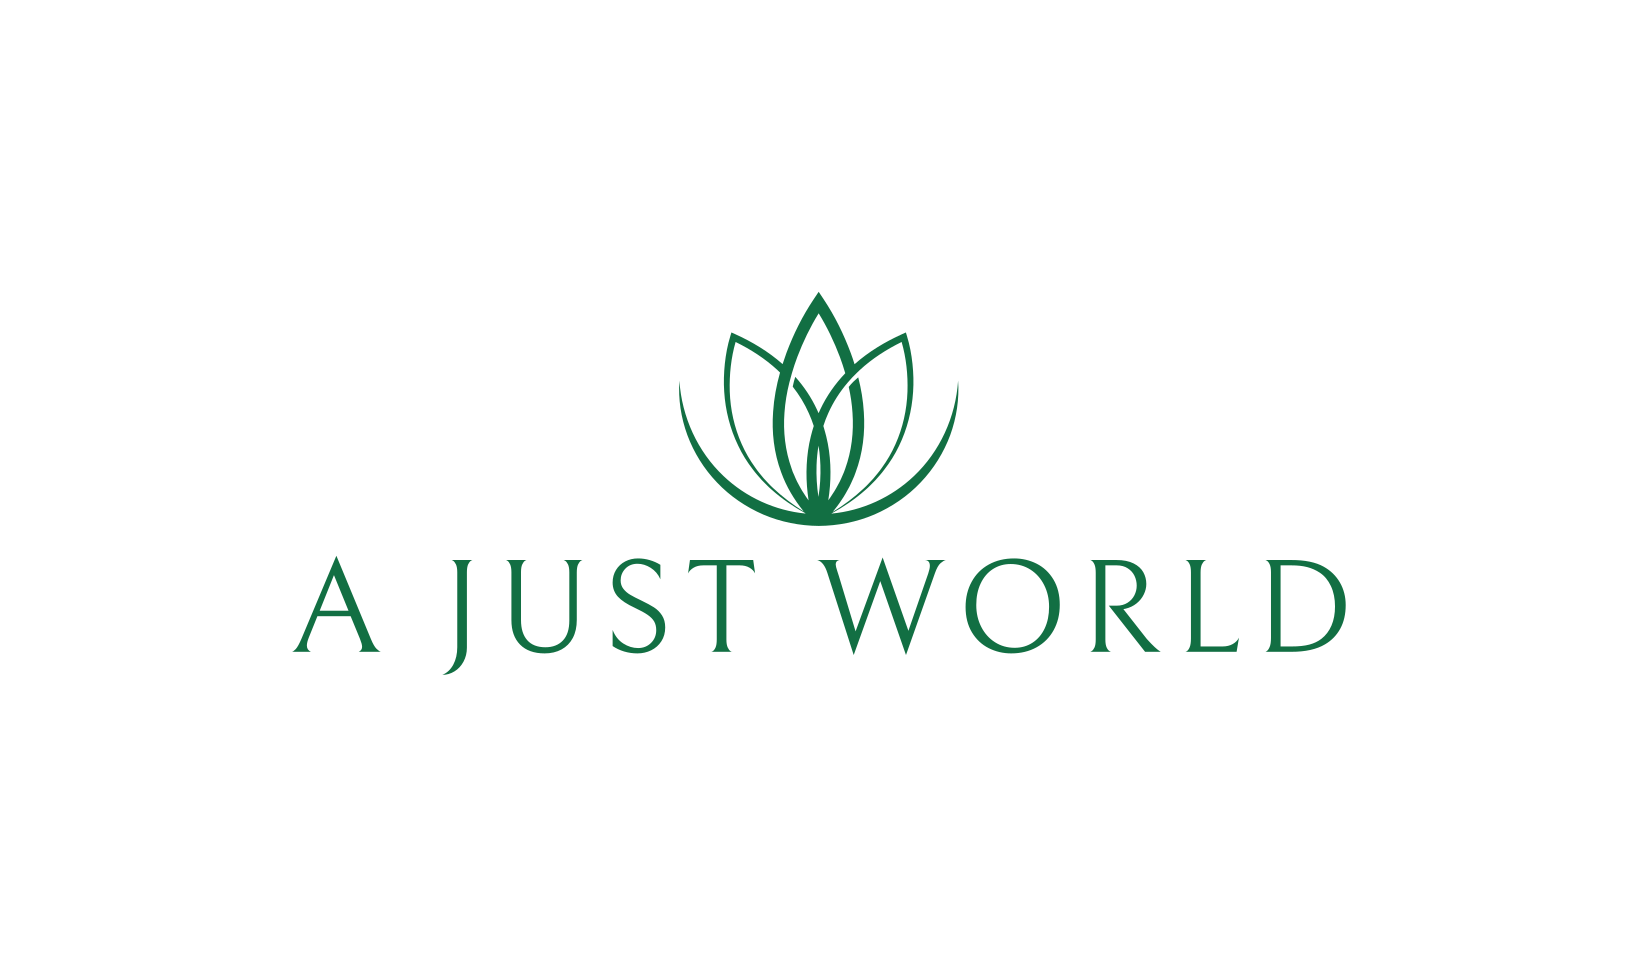 A Just World